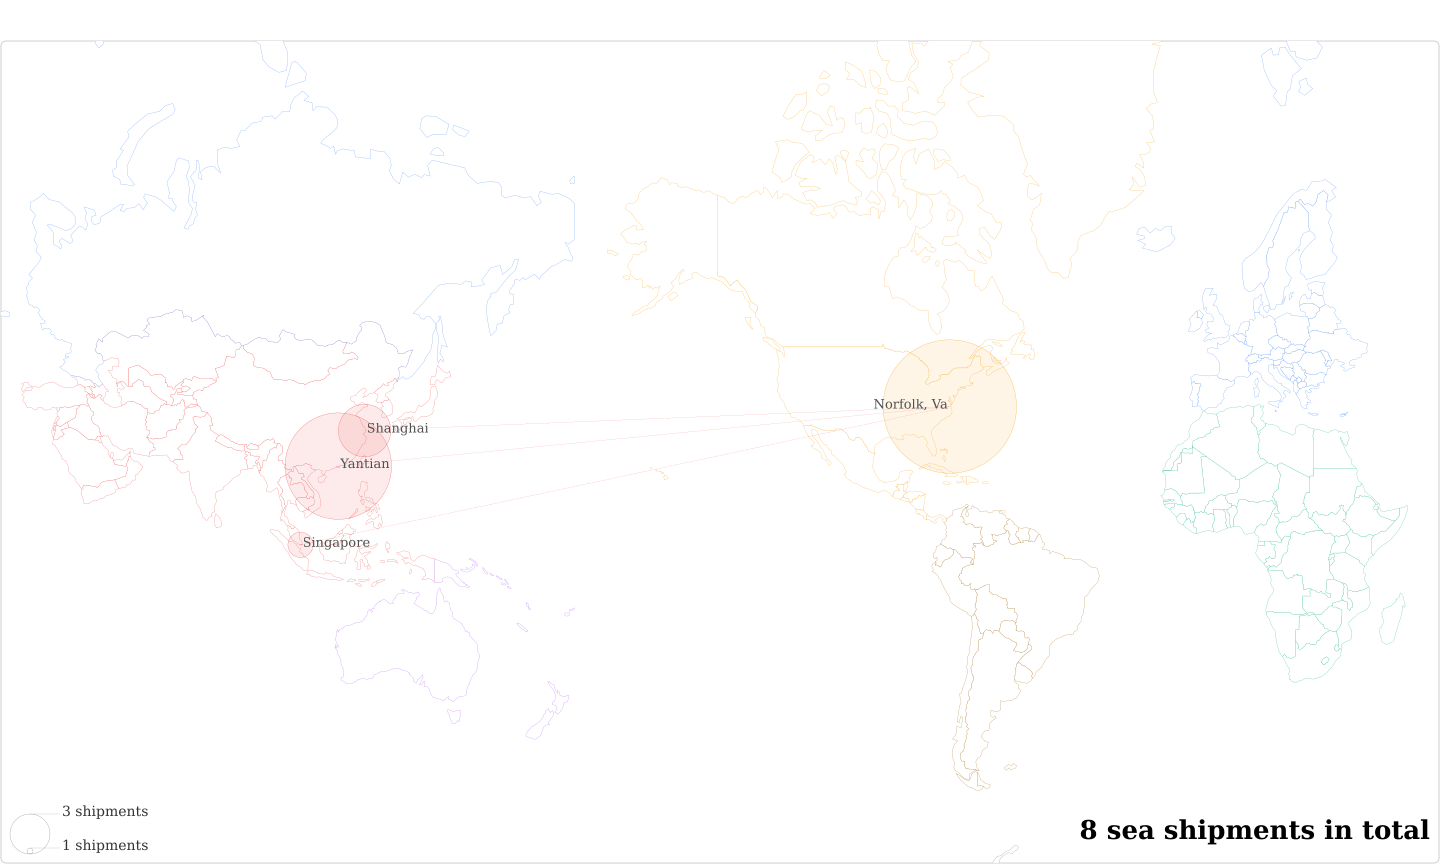 Aafes Logistics Dan Daniel Distribu's Imports Per Country Map